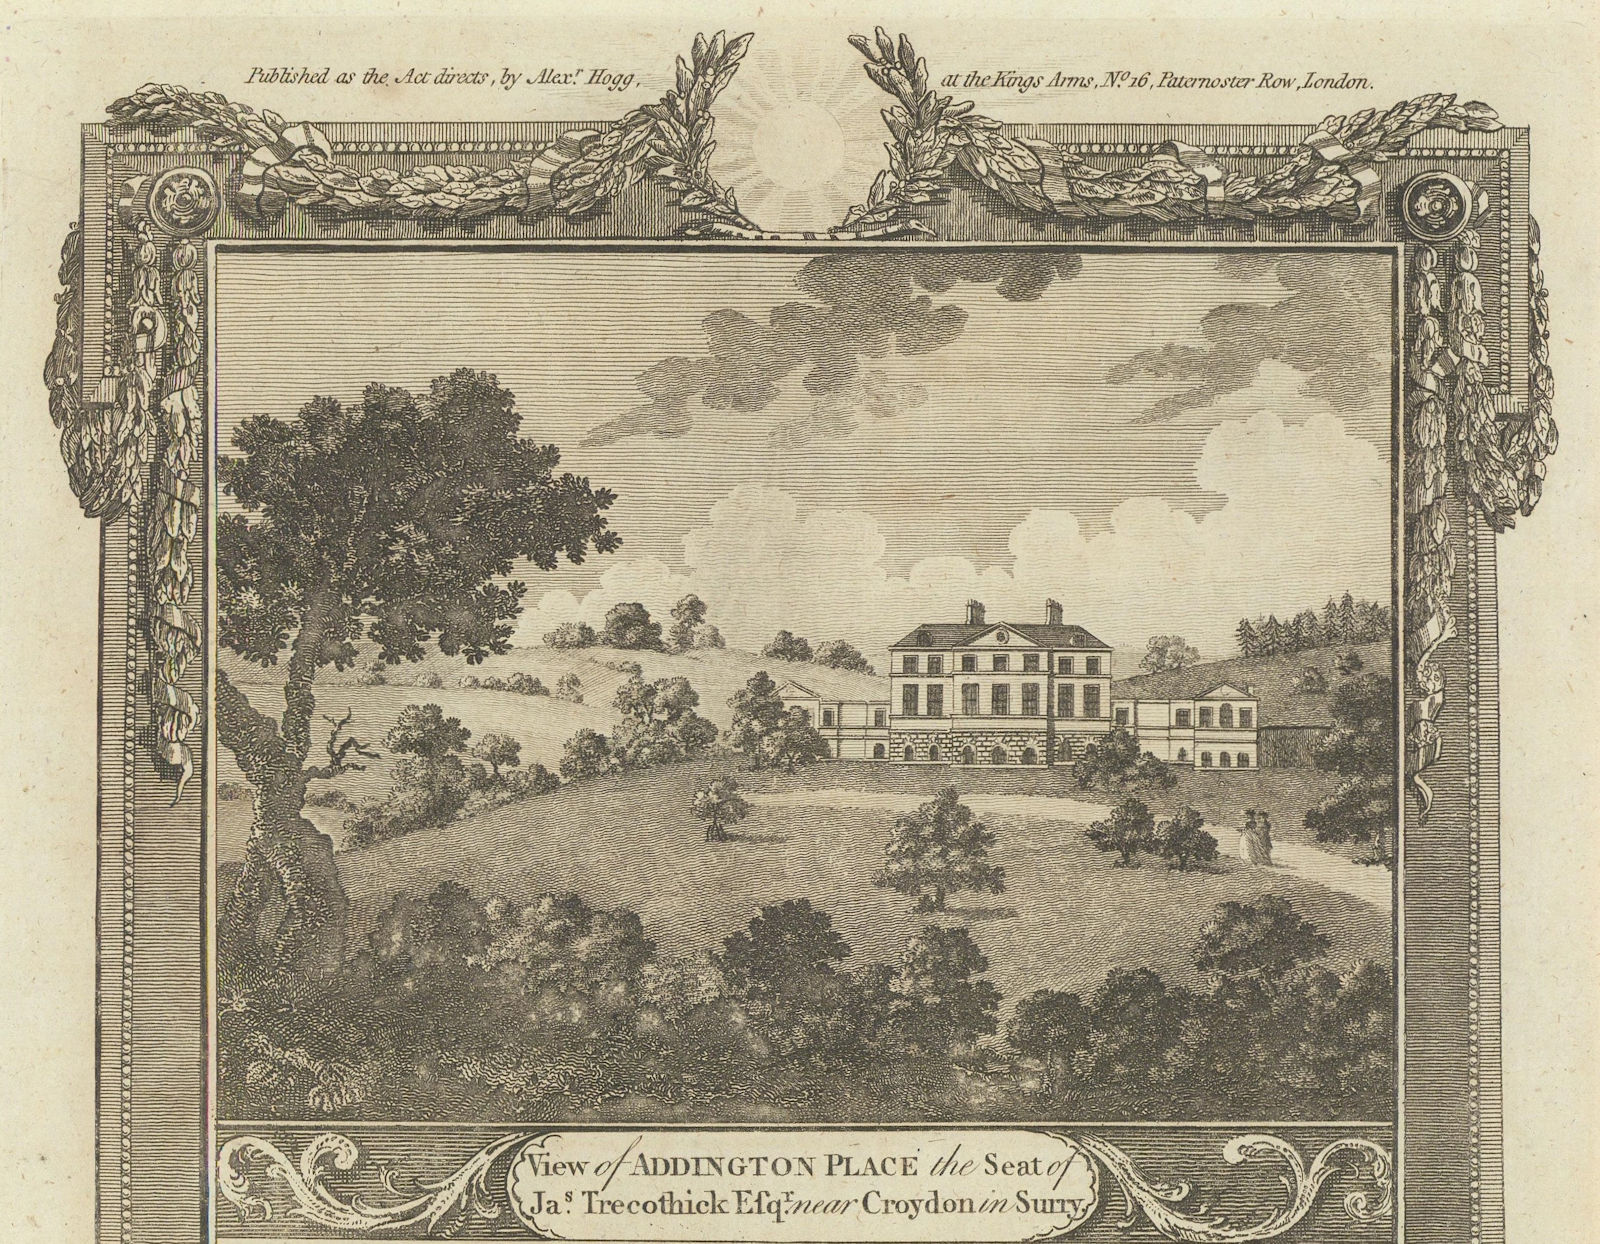 View of Addington Place (now Palace), Croydon. Trecothick seat. THORNTON 1784